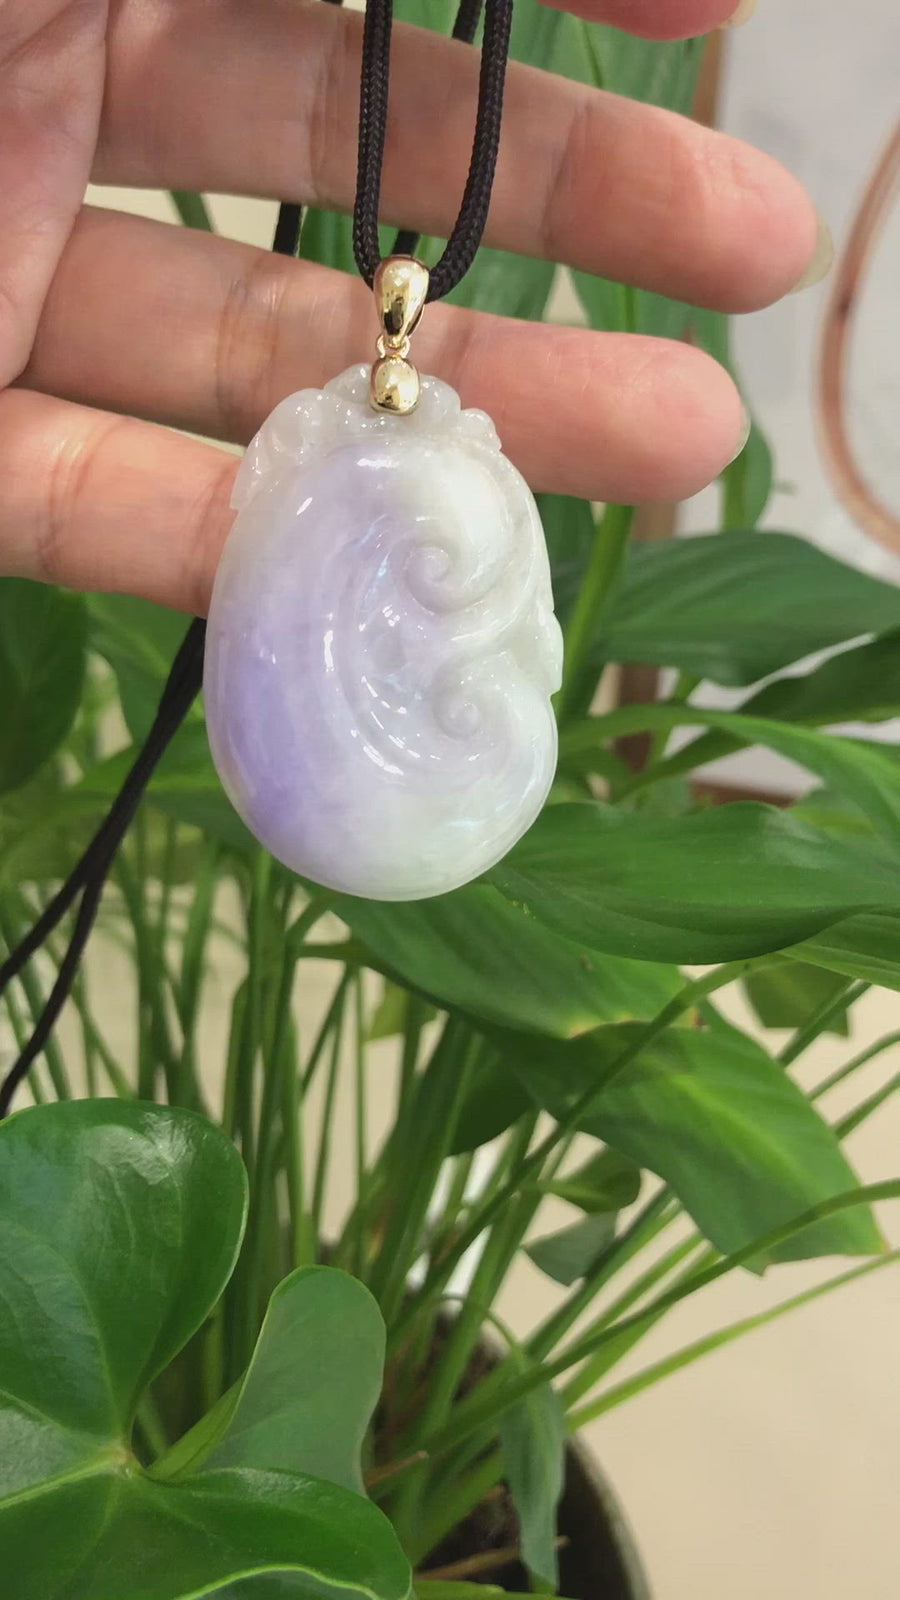 Genuine Lavender Jadeite Jade RuYi Pendant Necklace With 14K Yellow Gold Bail